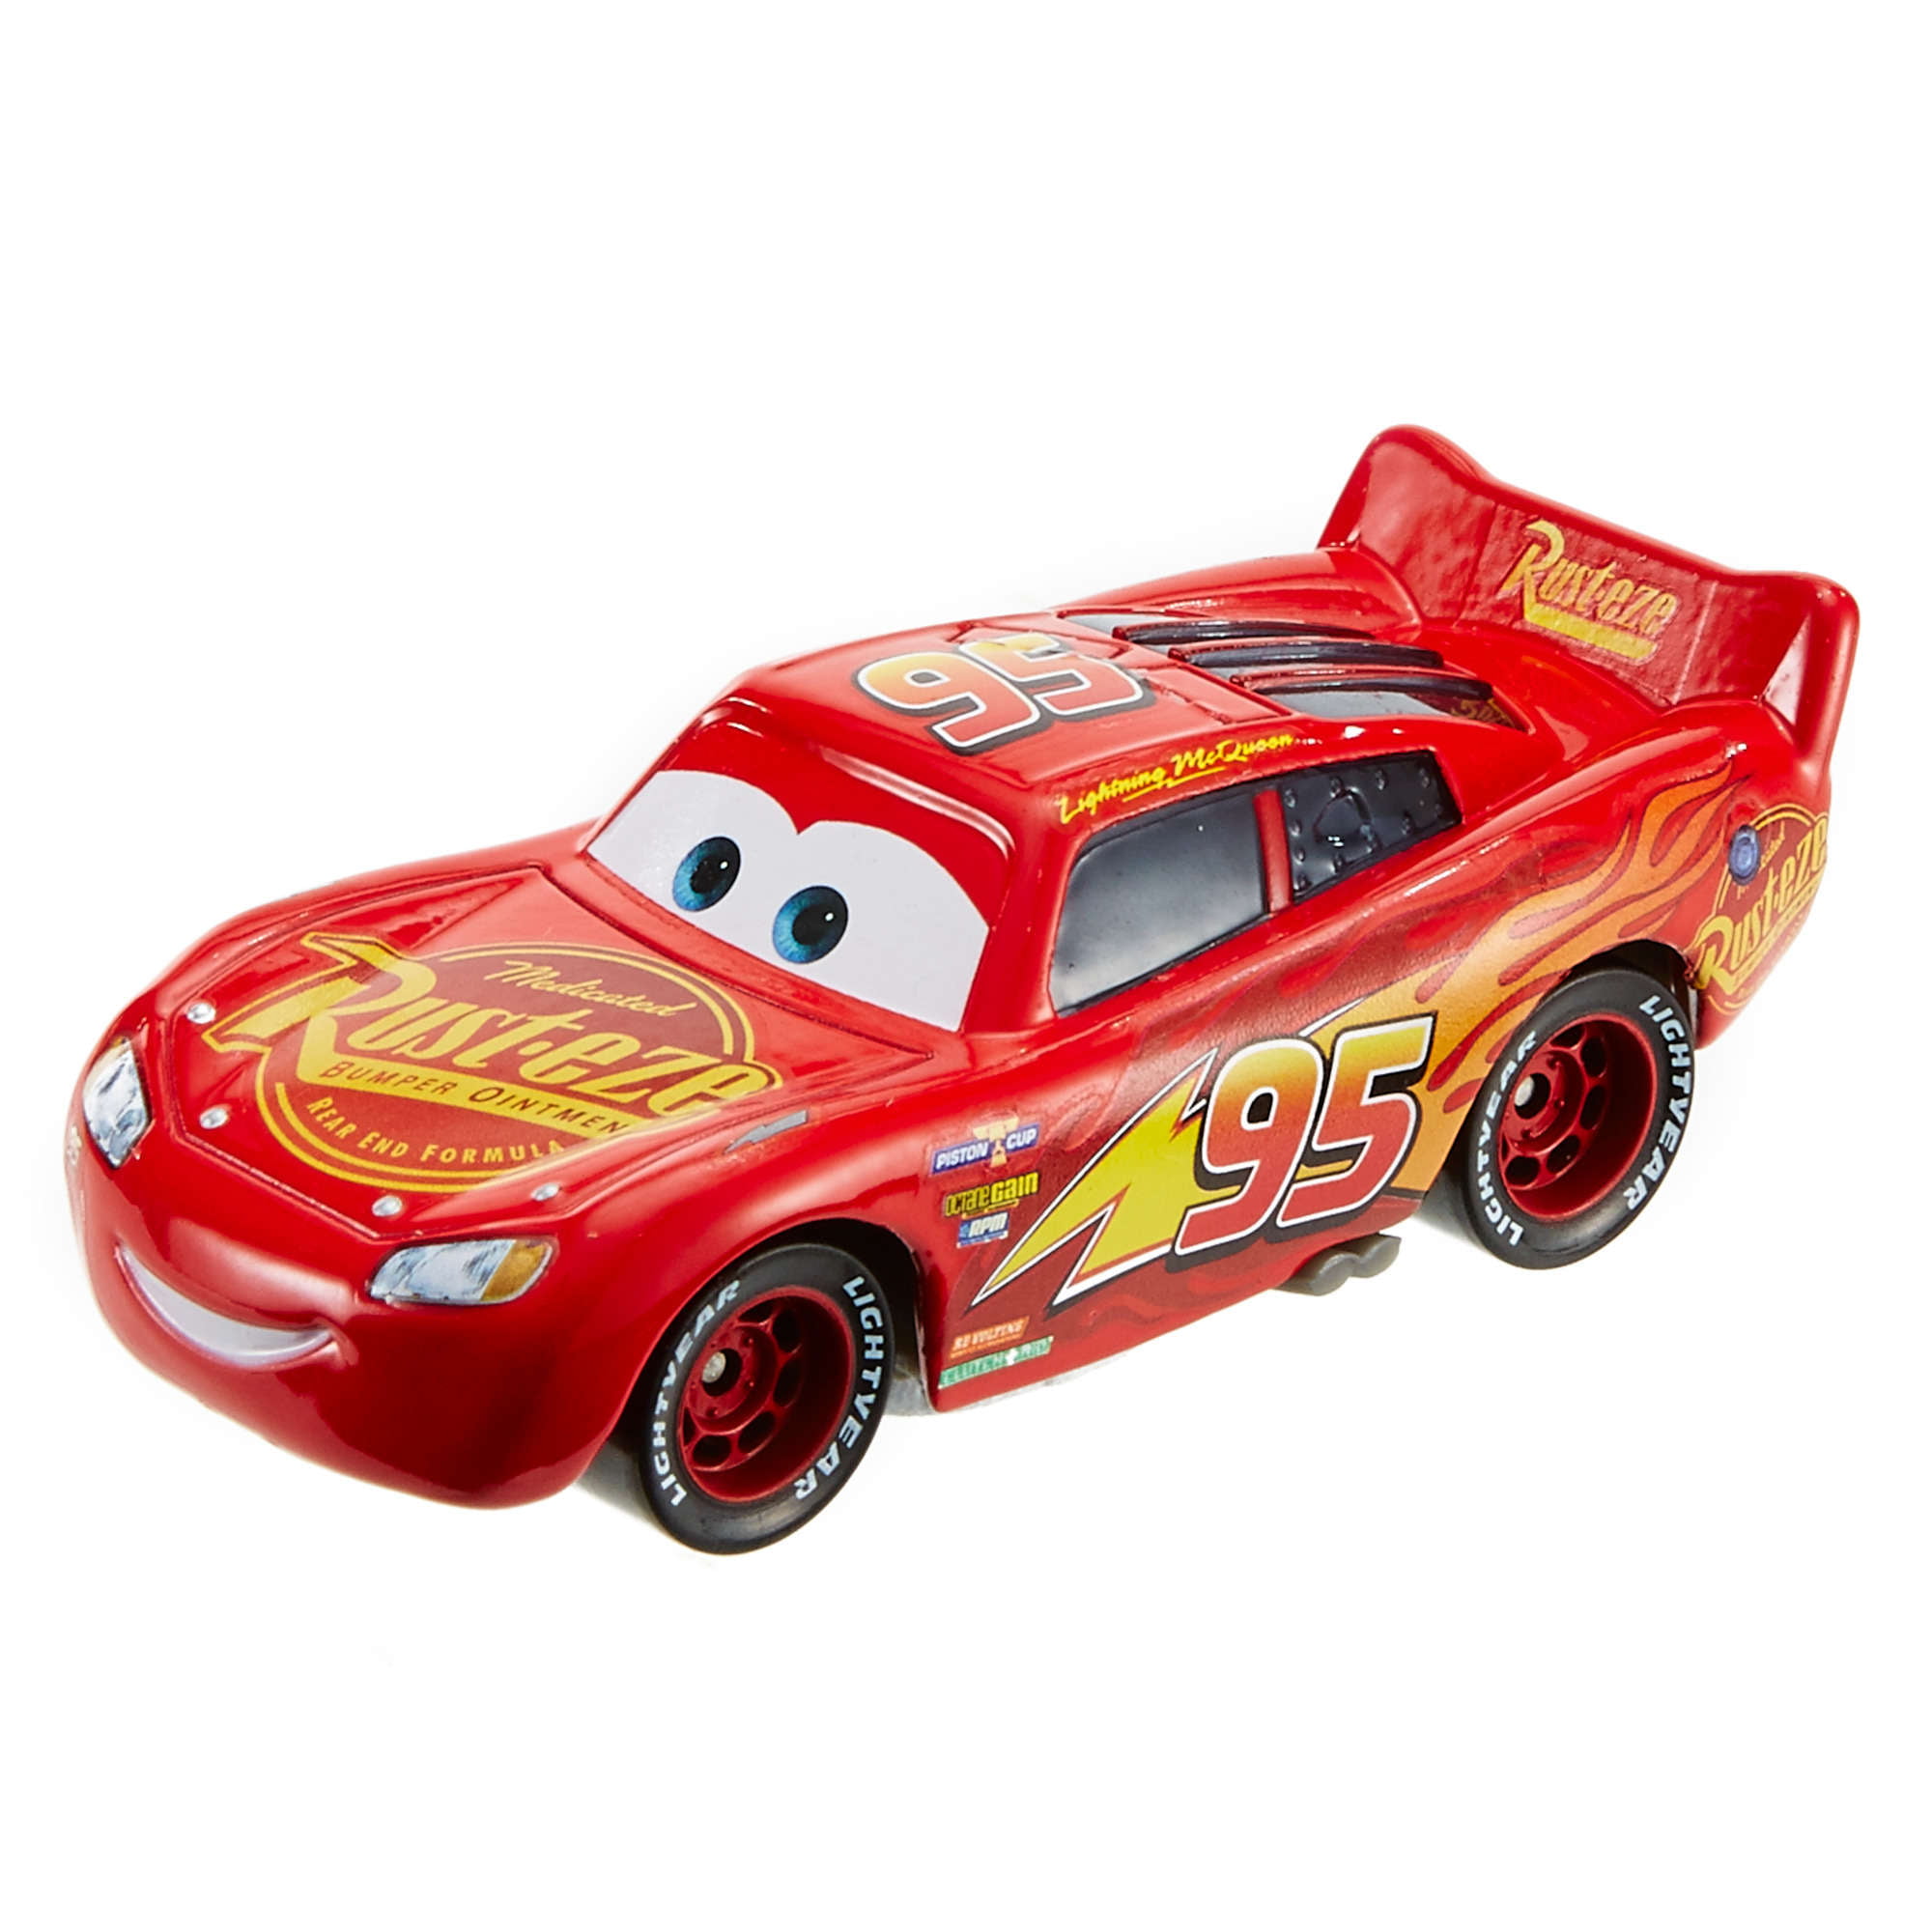 Disney Cars 3 1 55 Scale Lightning Mcqueen Diecast Car – Walmart